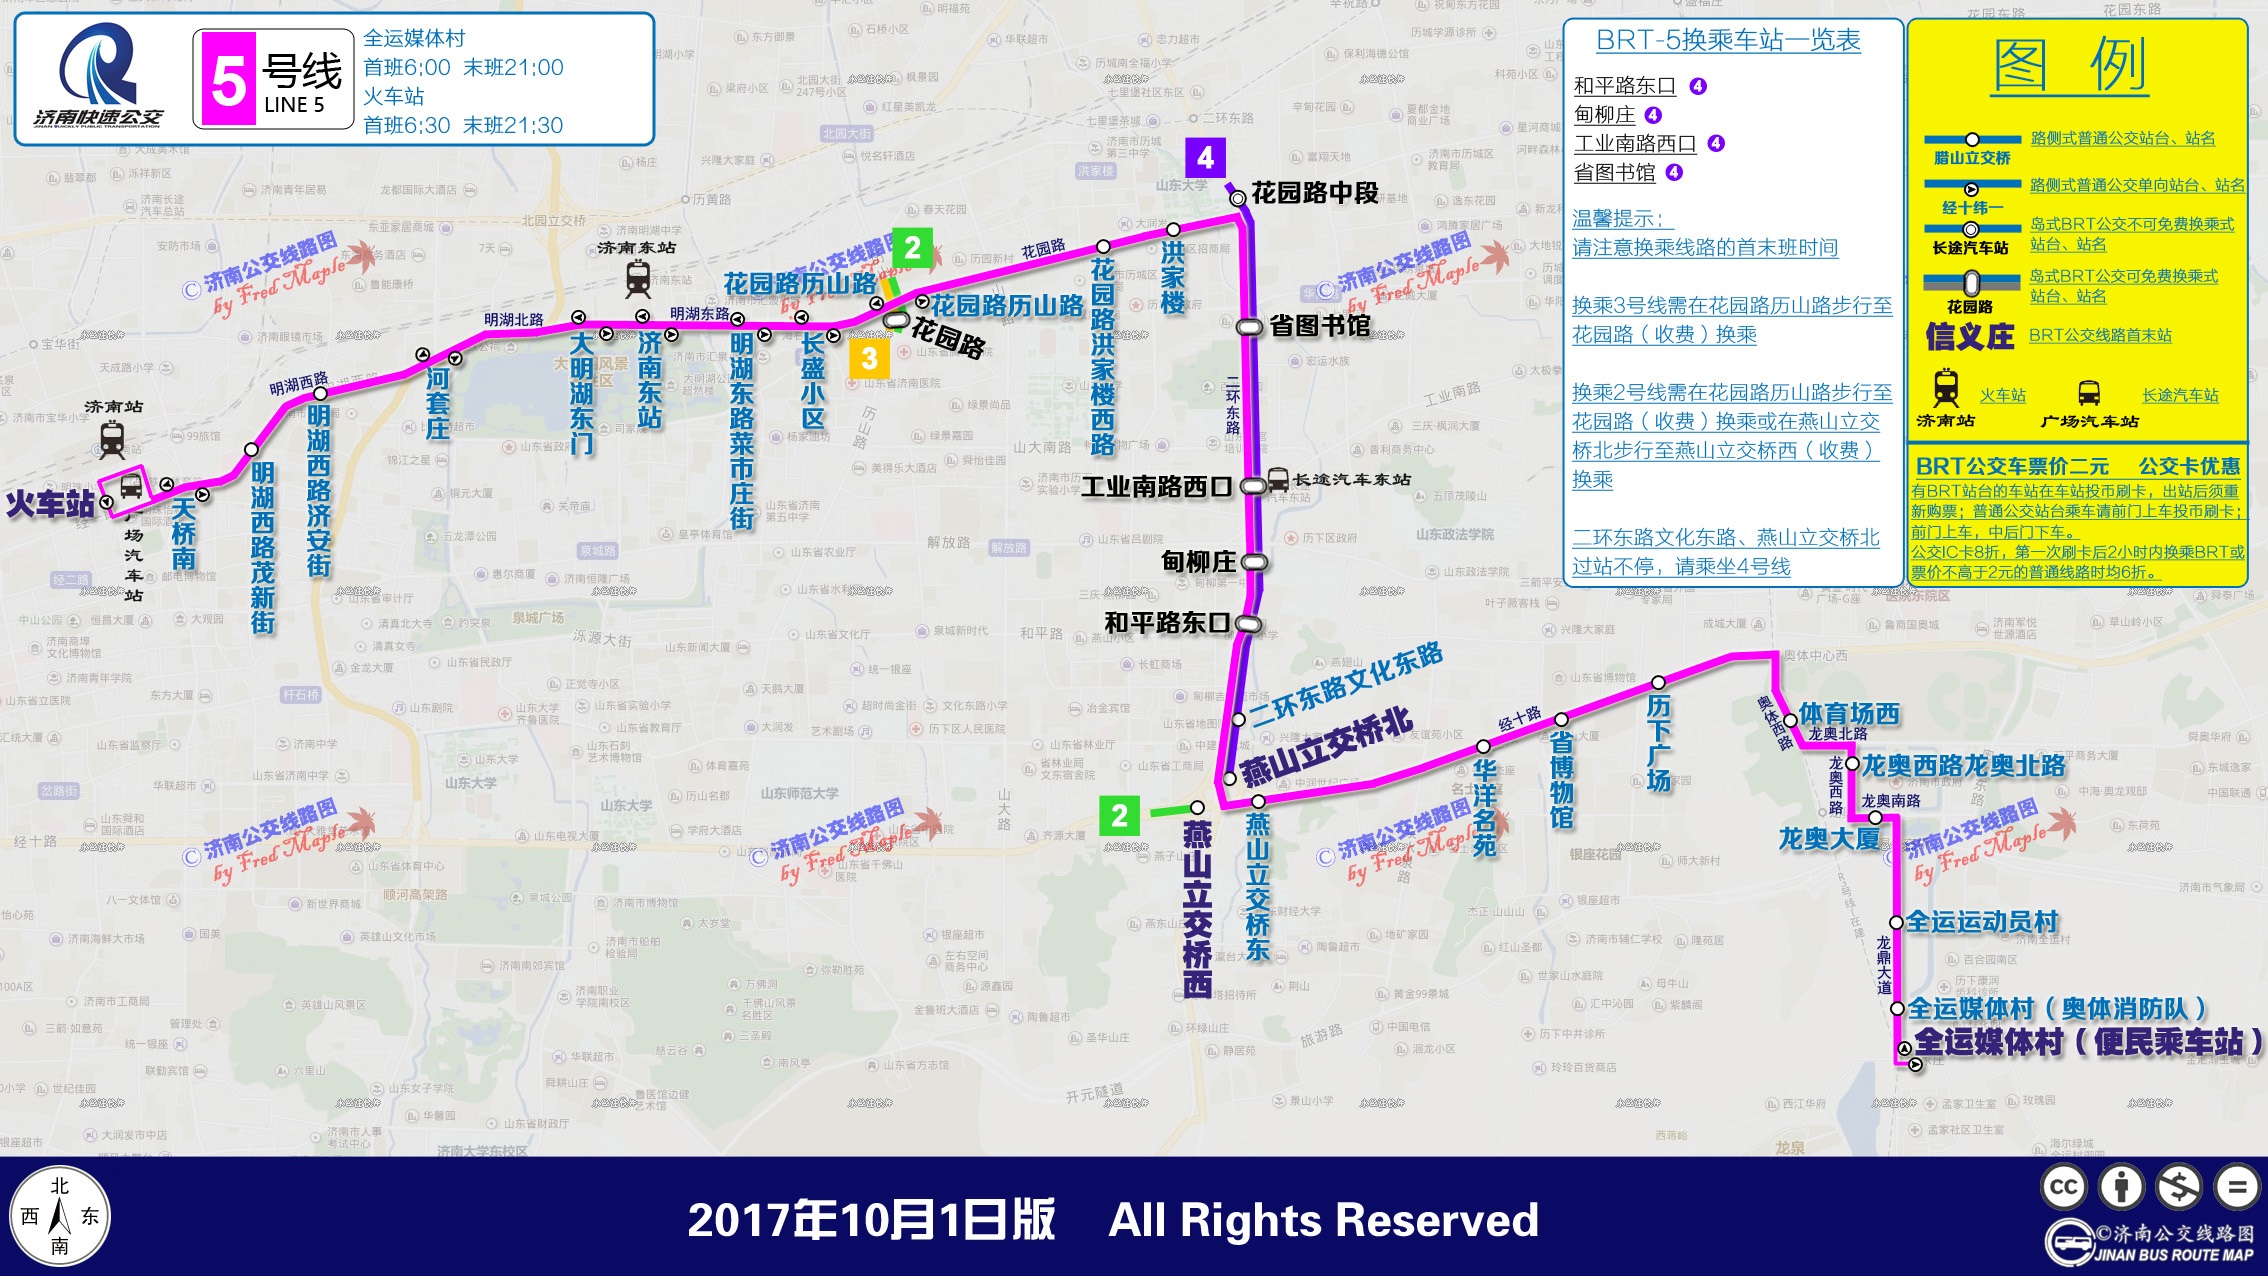 BRT-5號線線路圖